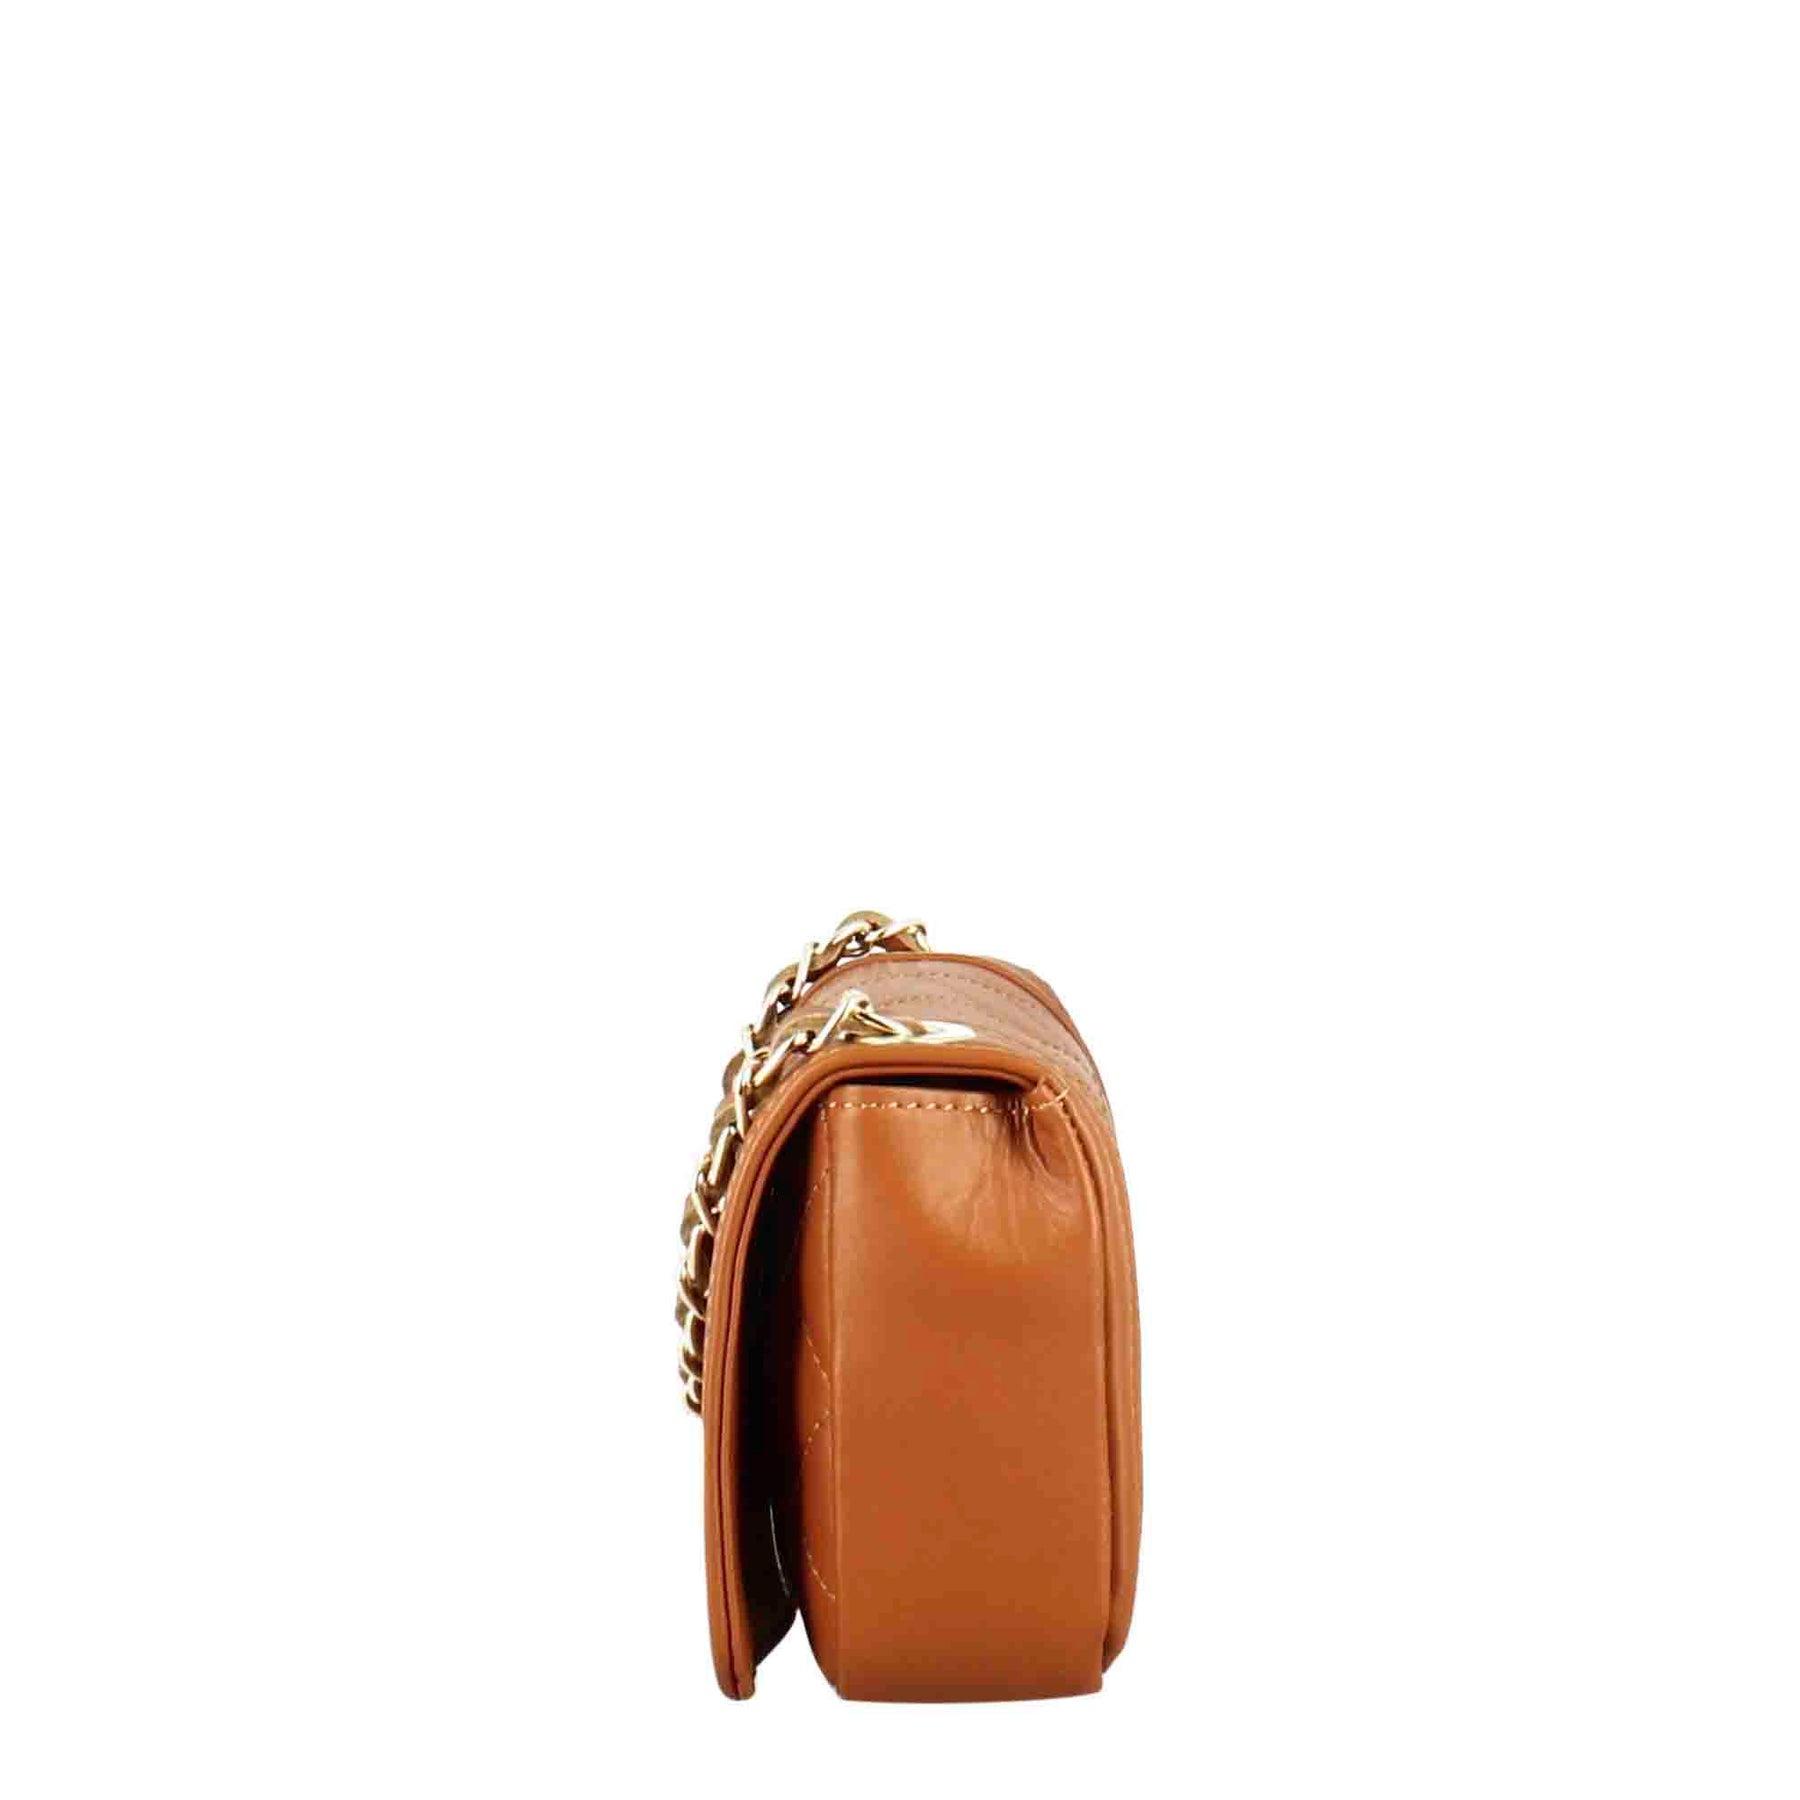 Timeless brown quilted leather shoulder bag